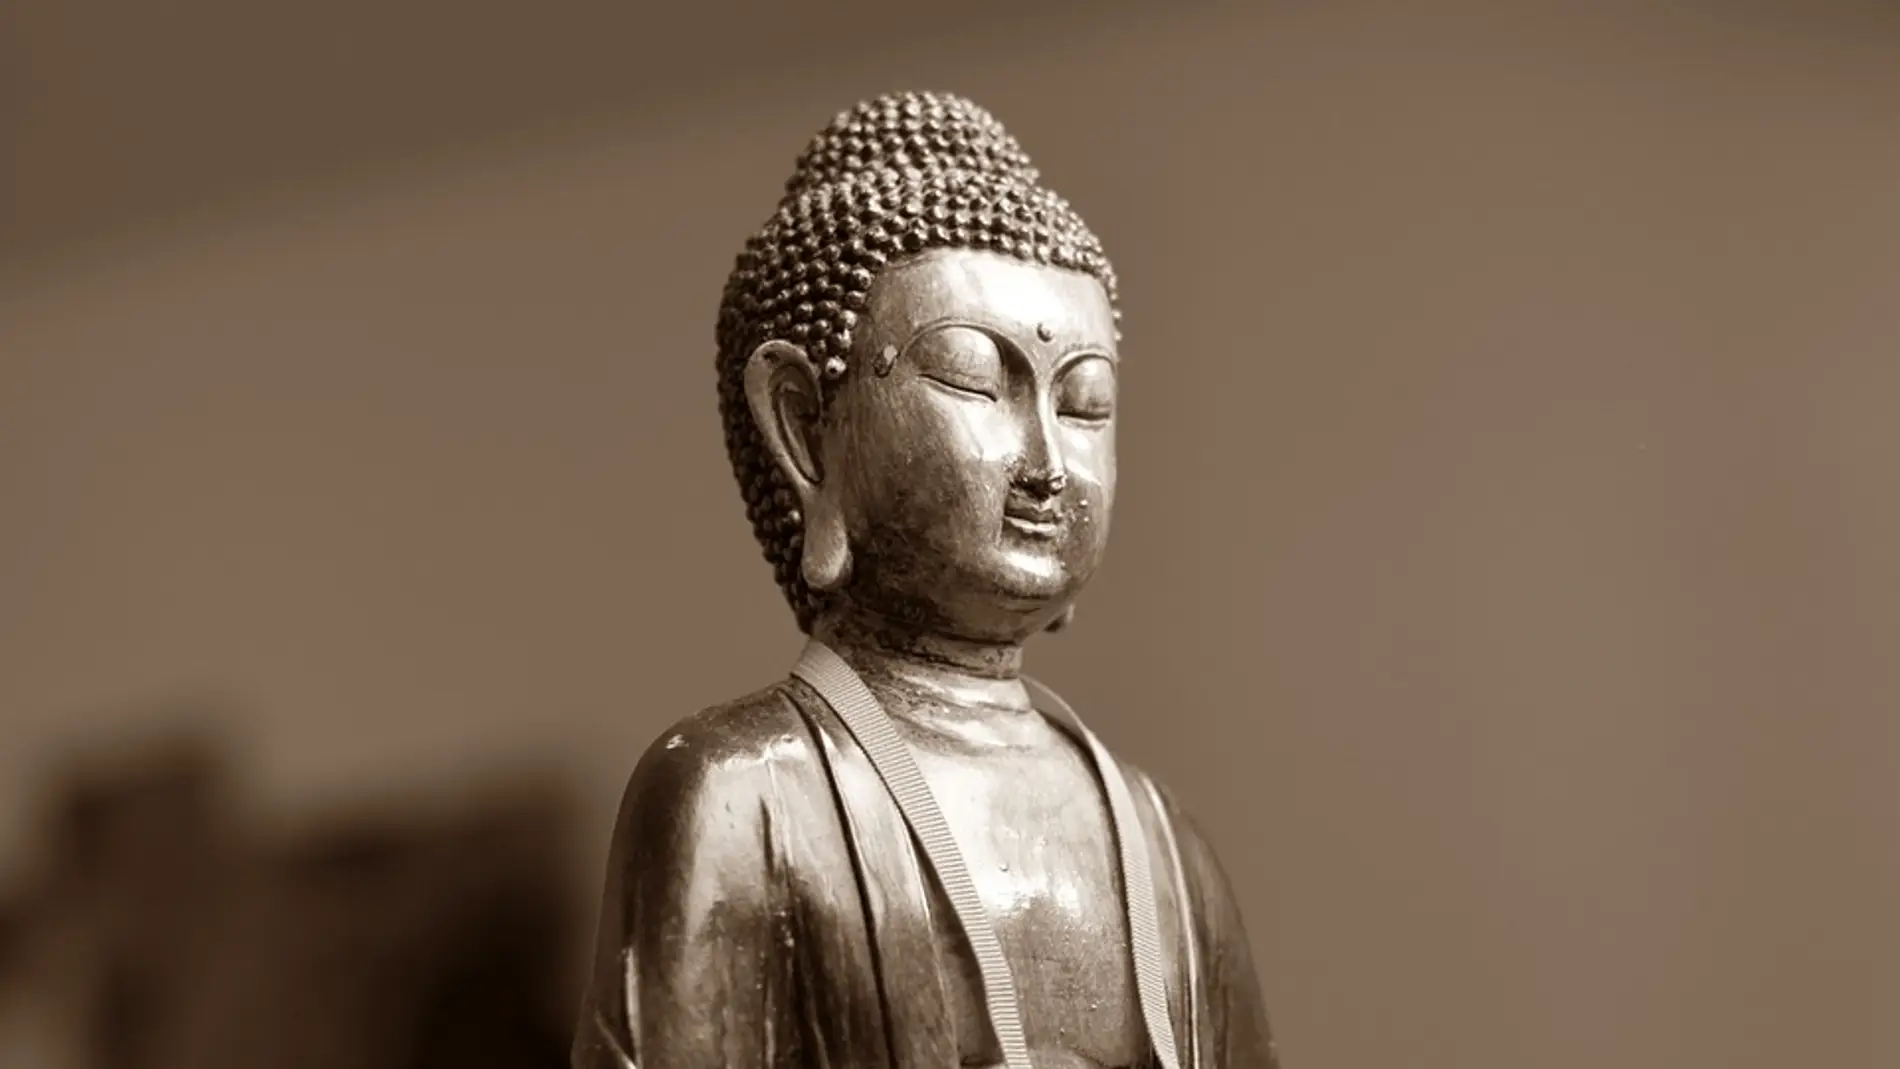 Budismo